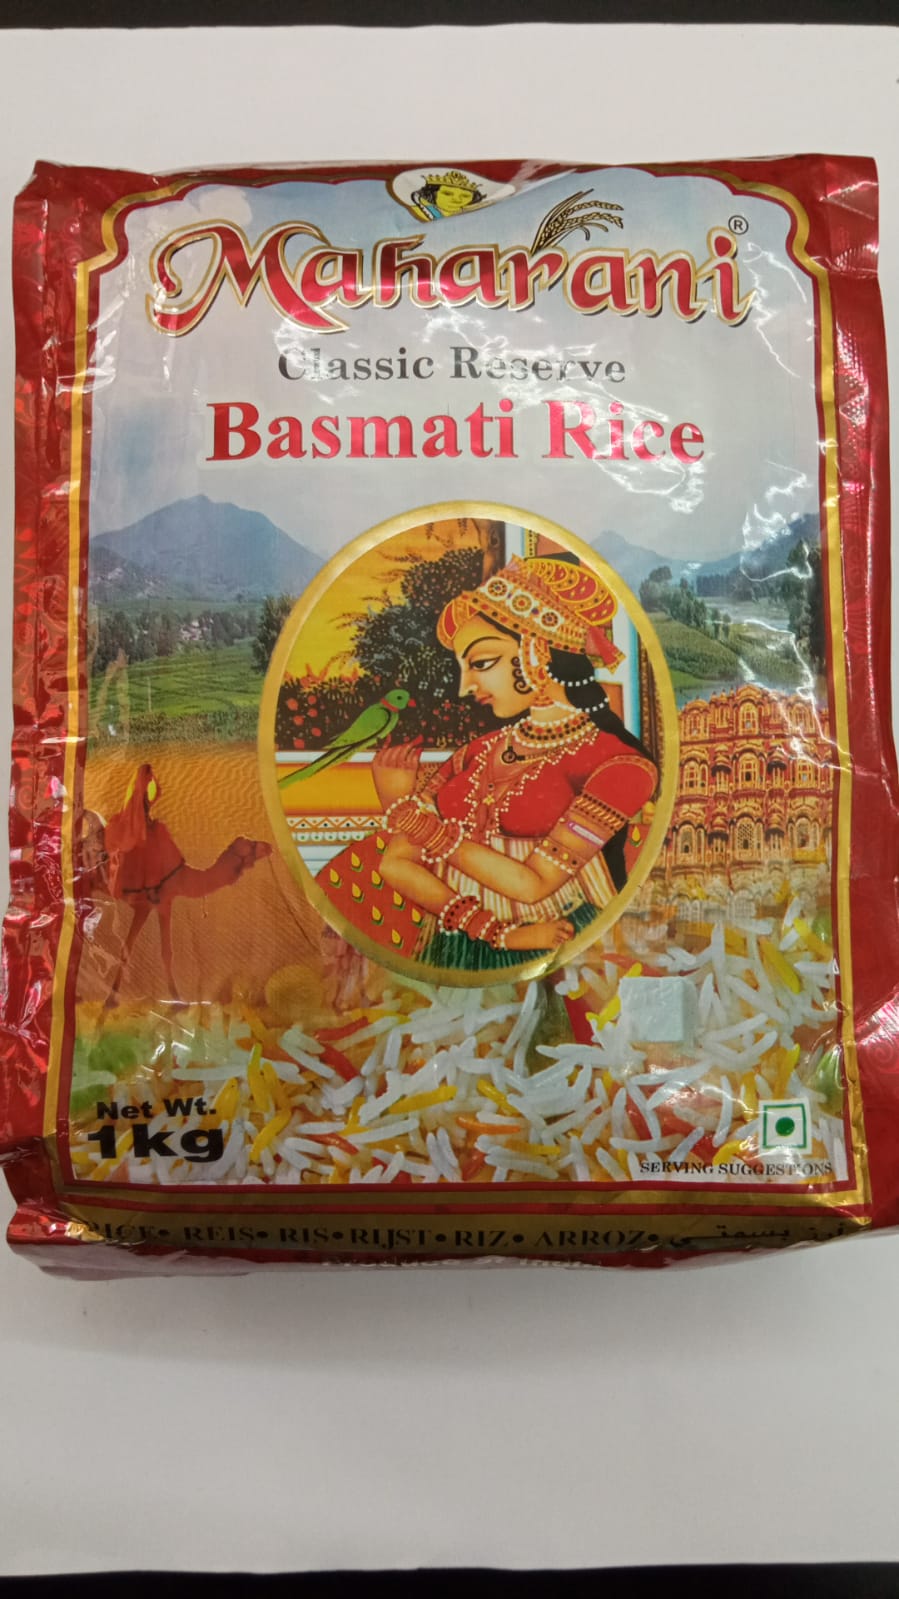 Mahakaal - Maharani Basmati Rice 1kg ข้าวบัสมาติ ตรา มหารานี ขนาด 1kg.